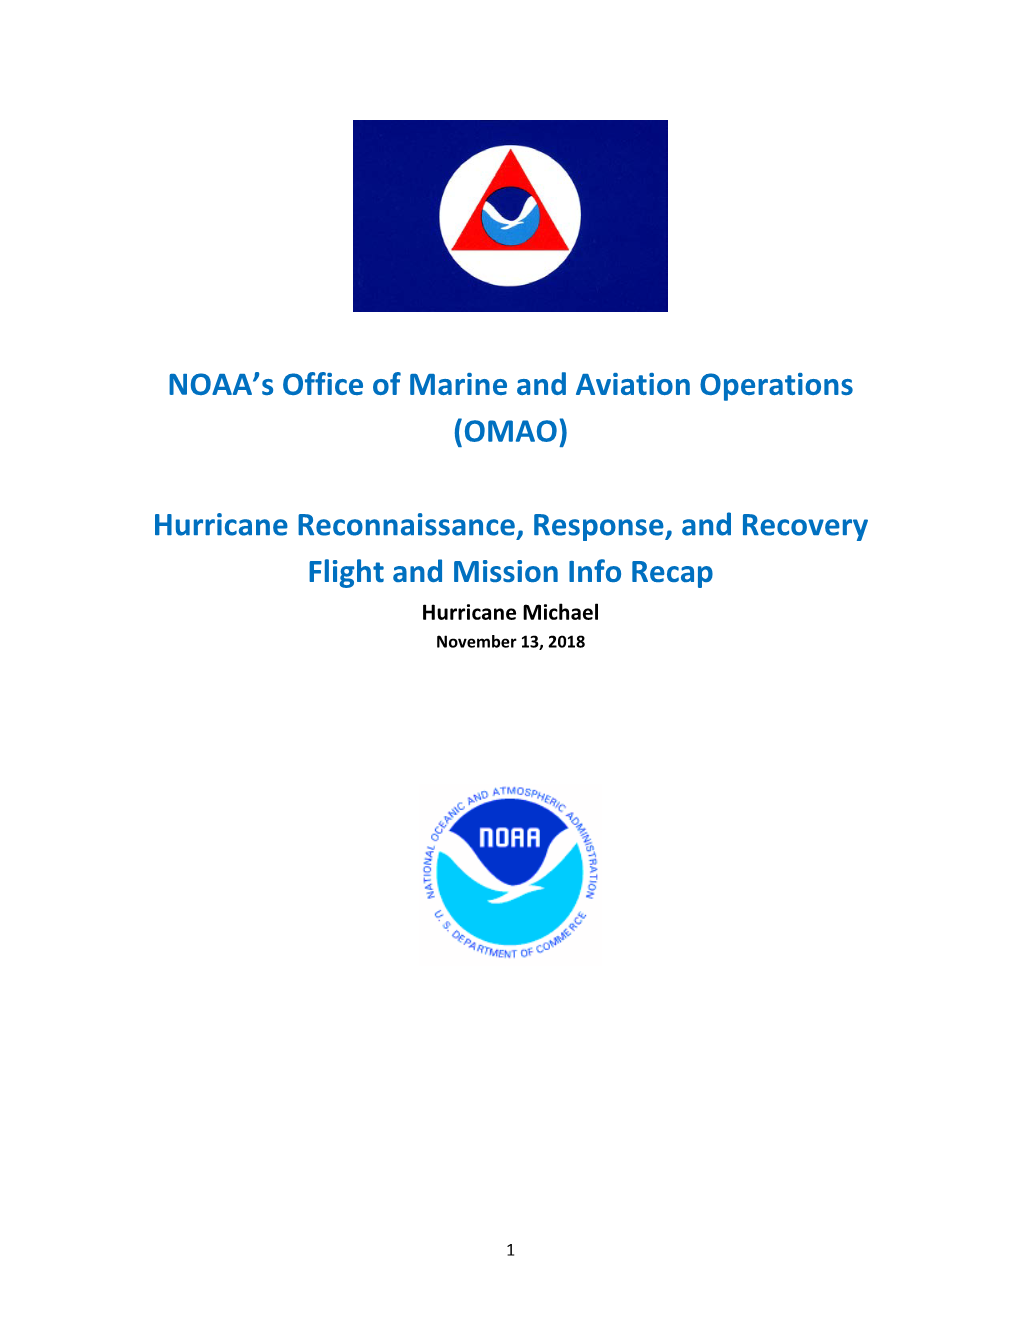 Hurricane Michael Flight and Mission Info Recap